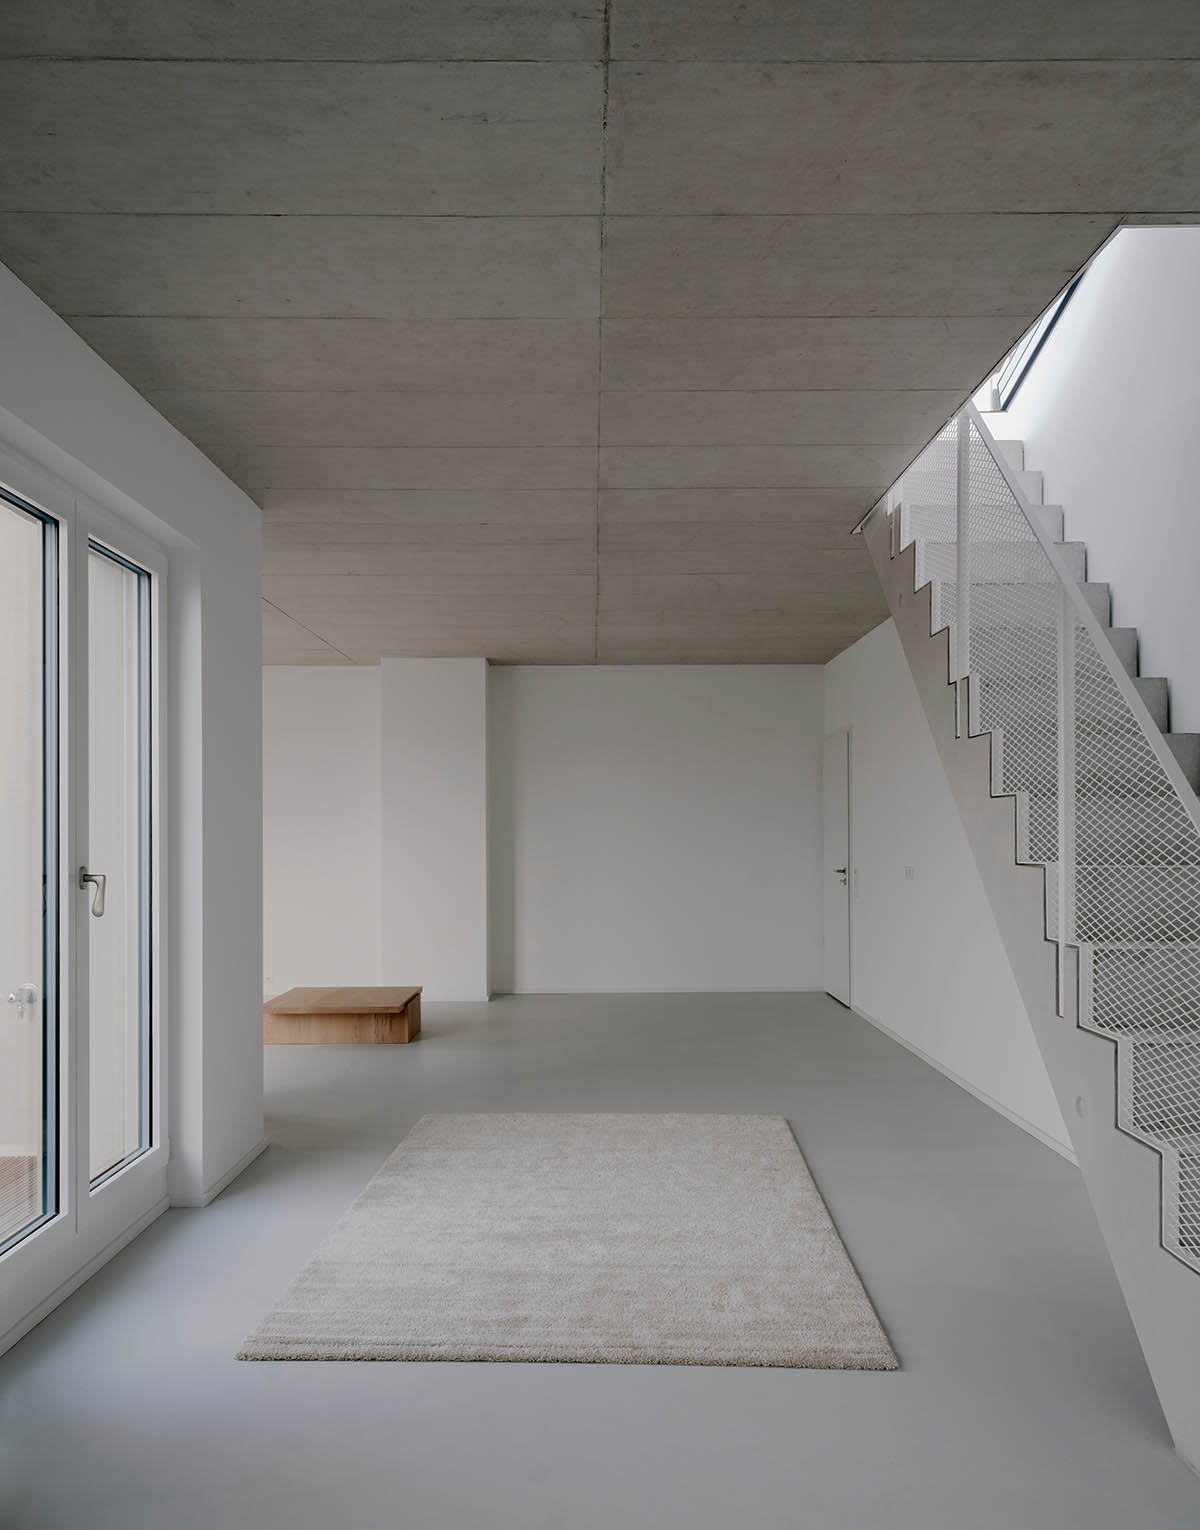 Appels Architekten built new housing featuring sleek and raw interiors in Berlin